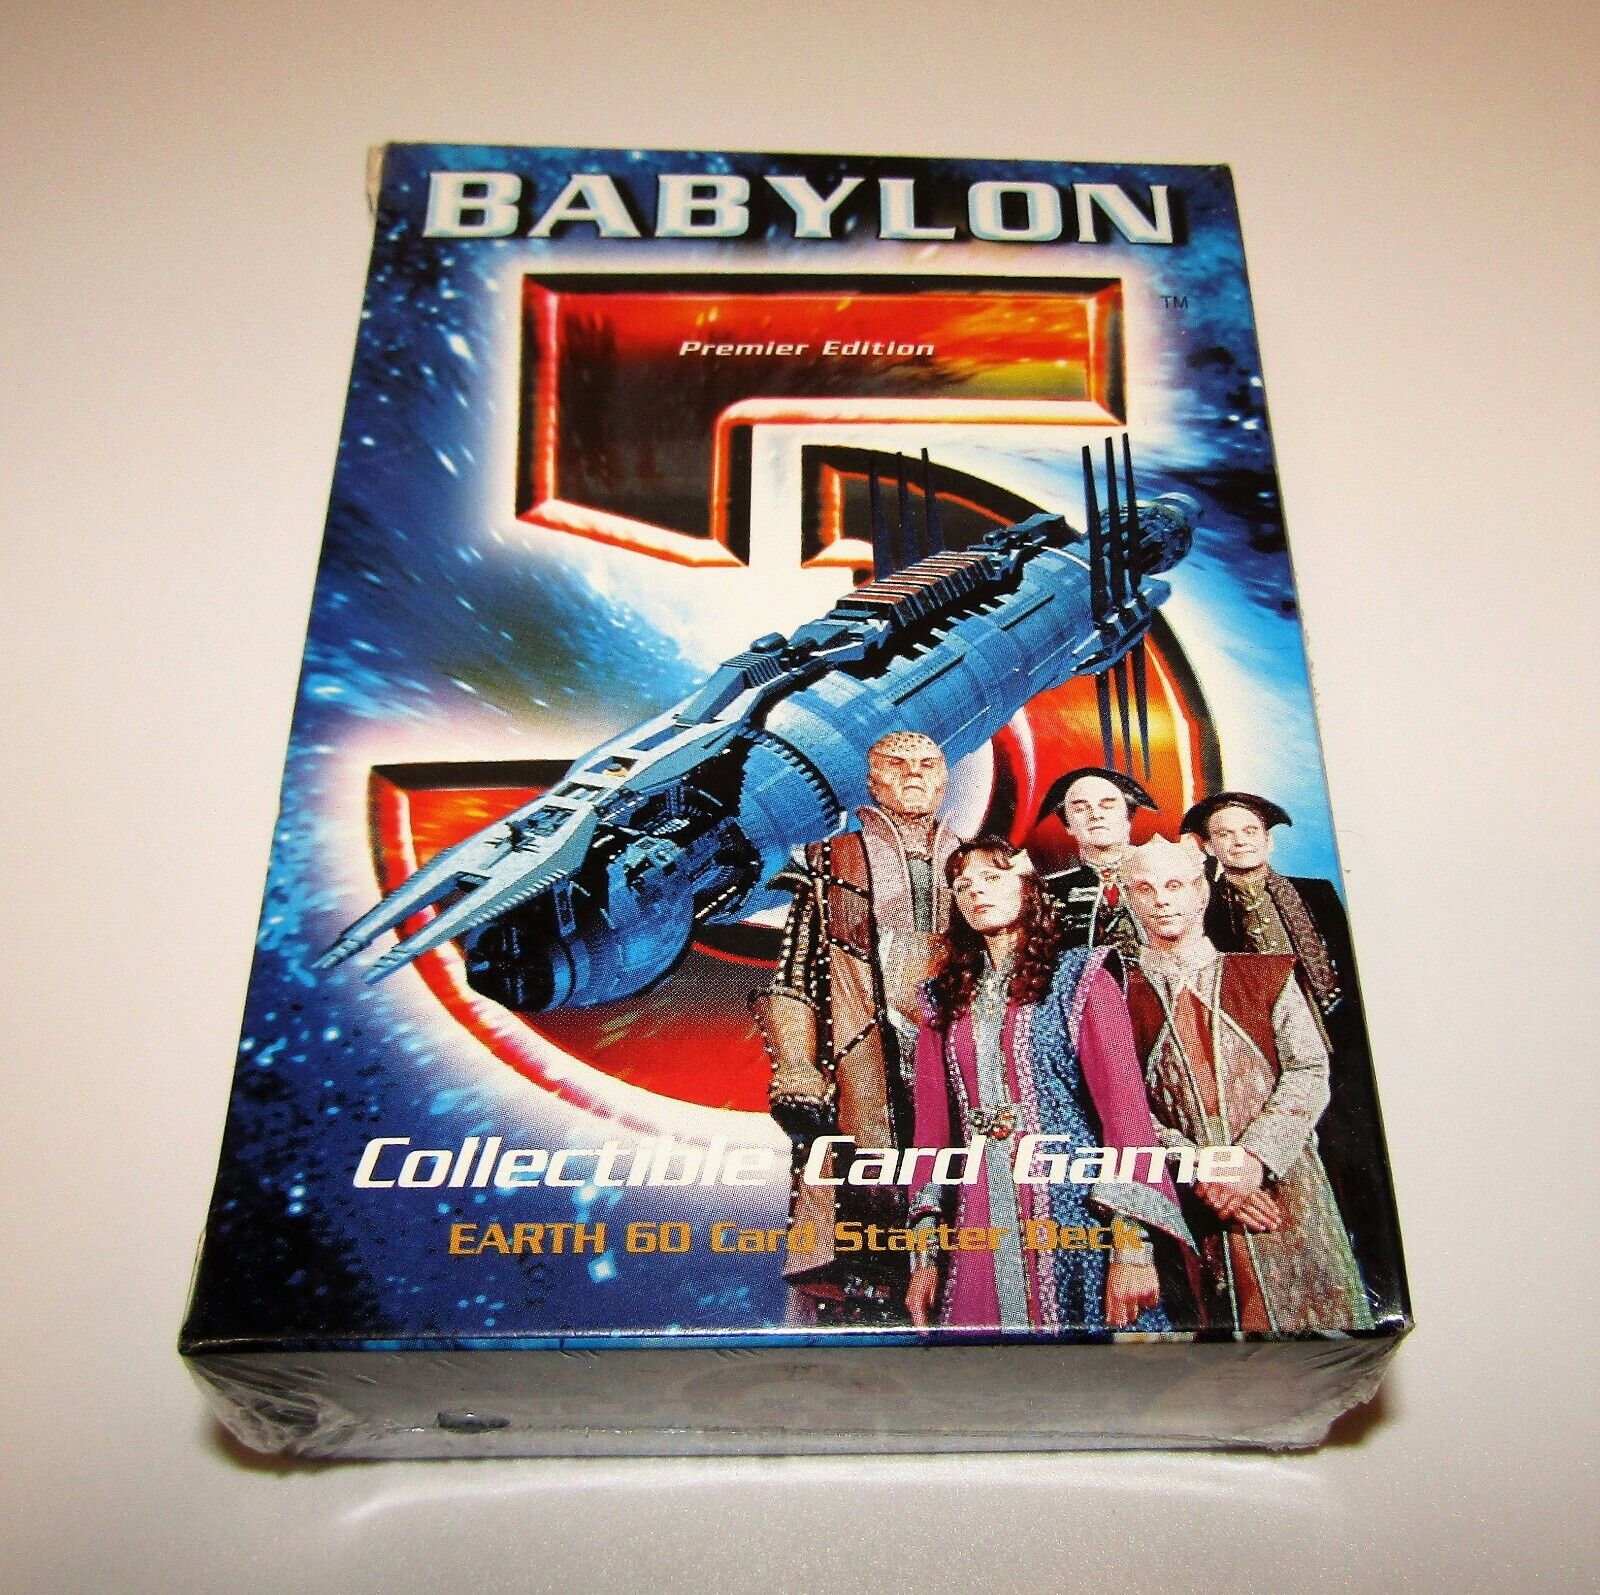 1997 Babylon 5 Collectible Card Game Premier Edition Earth 60 Card Starter Deck